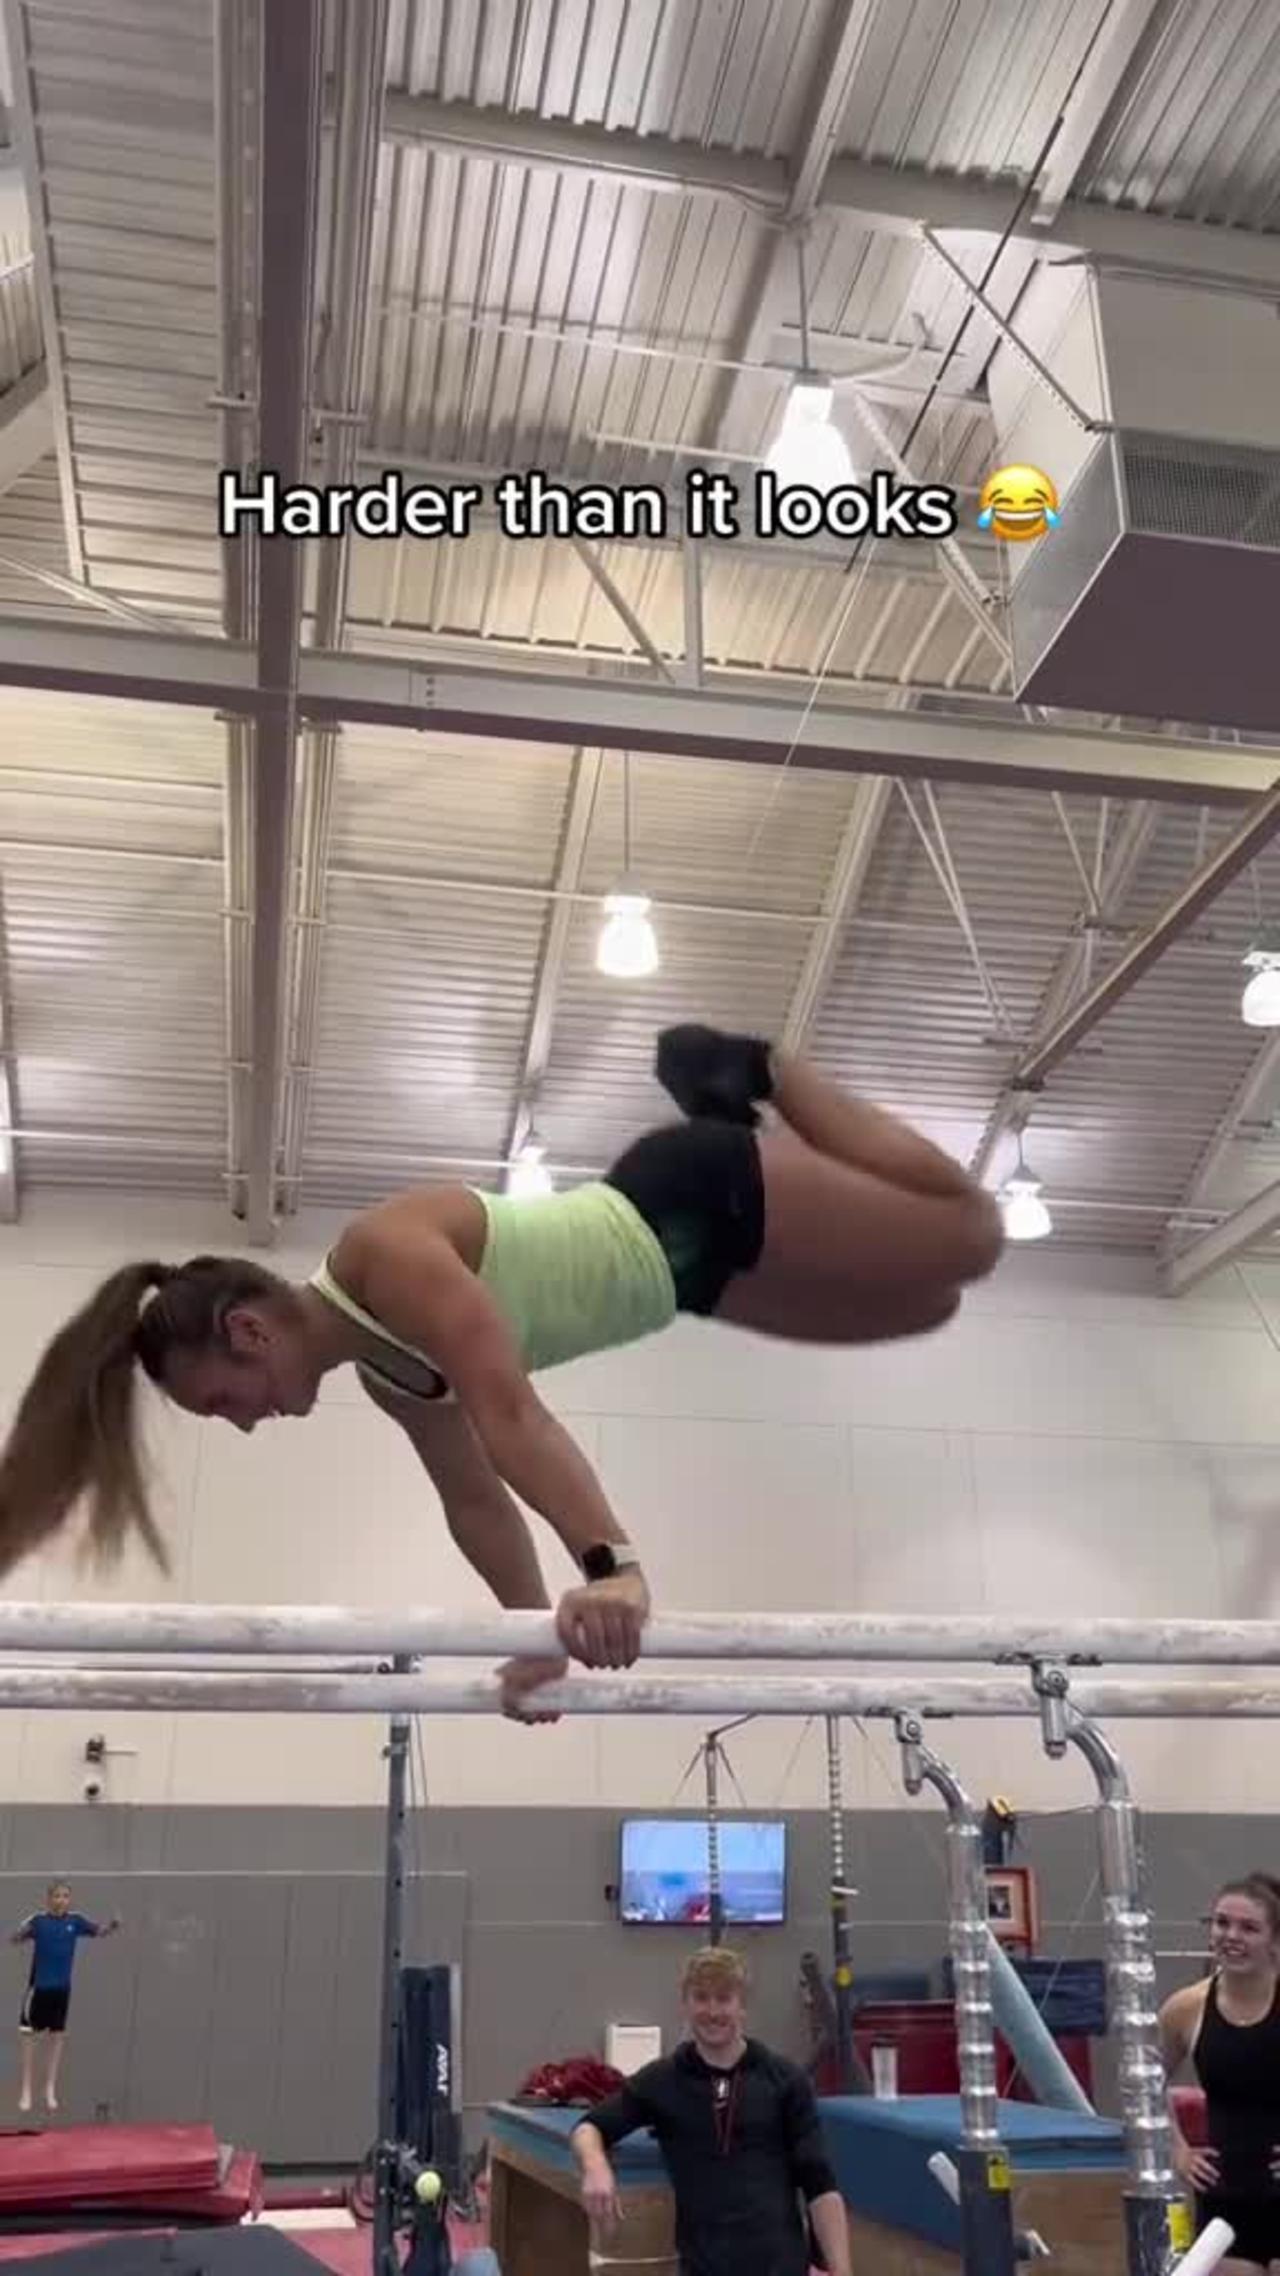 Should we try women’s gymnastics next 😂